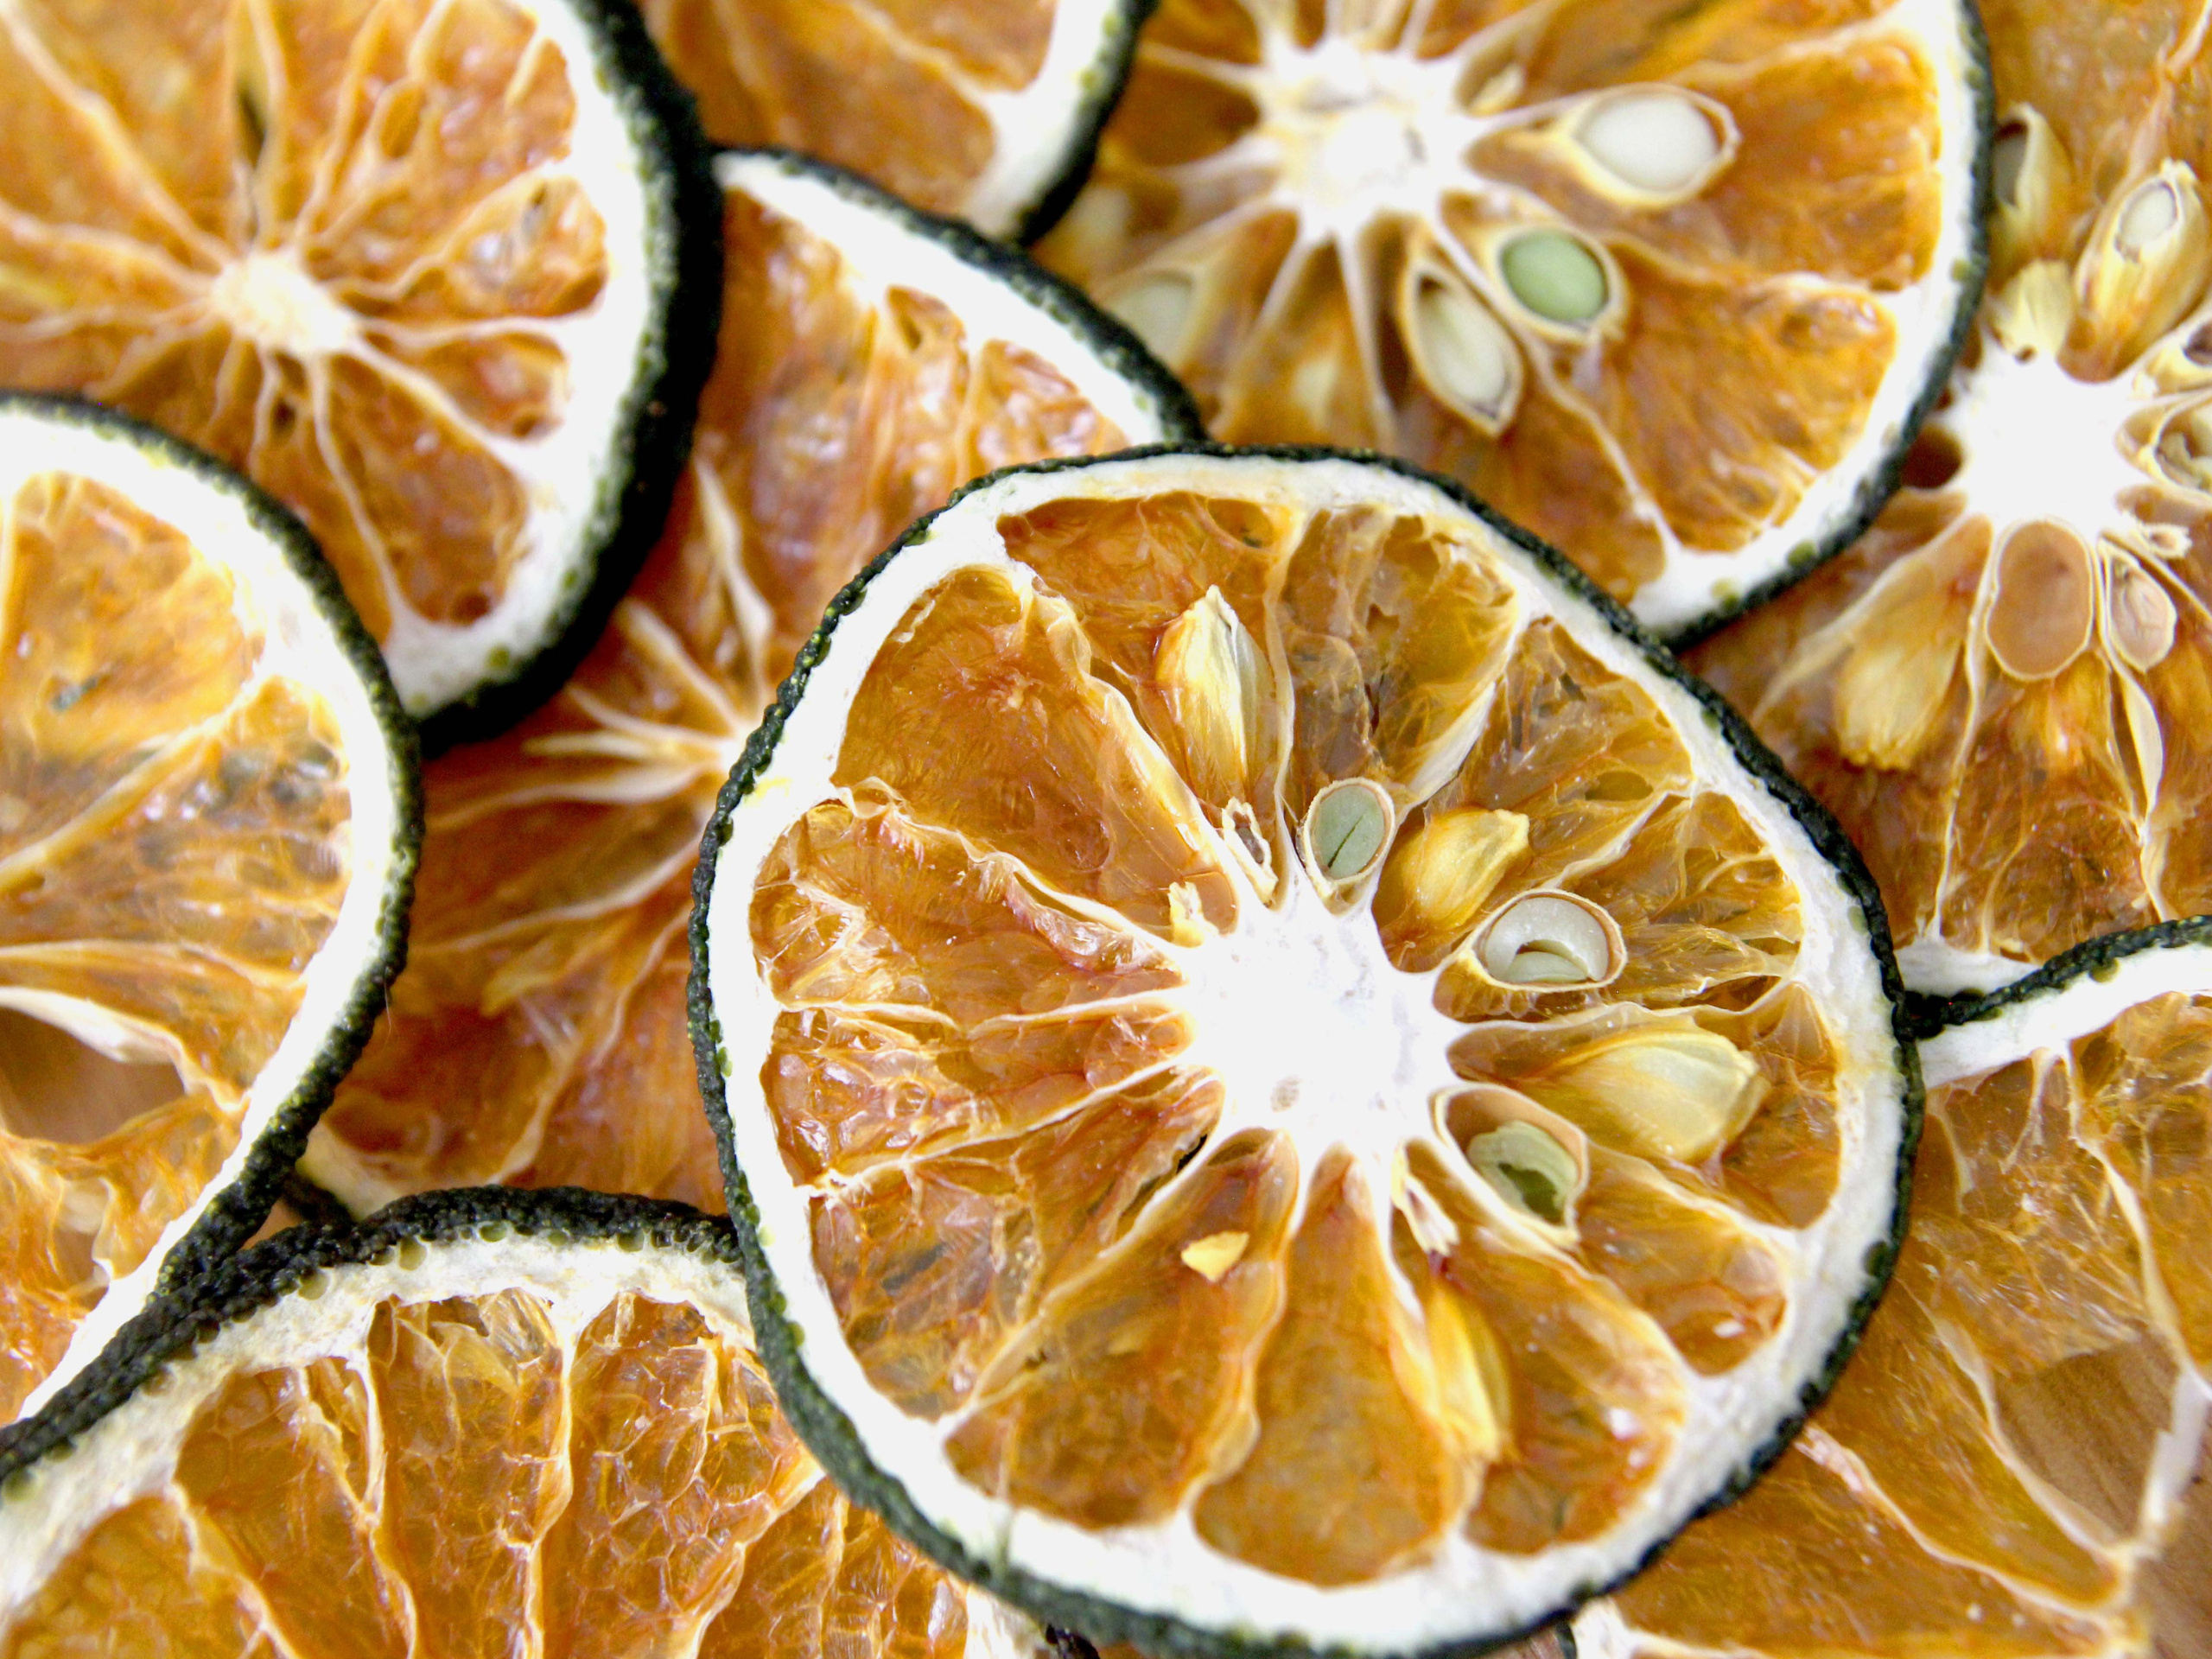 Classification king orange in cheerfarm, premium dried fruits